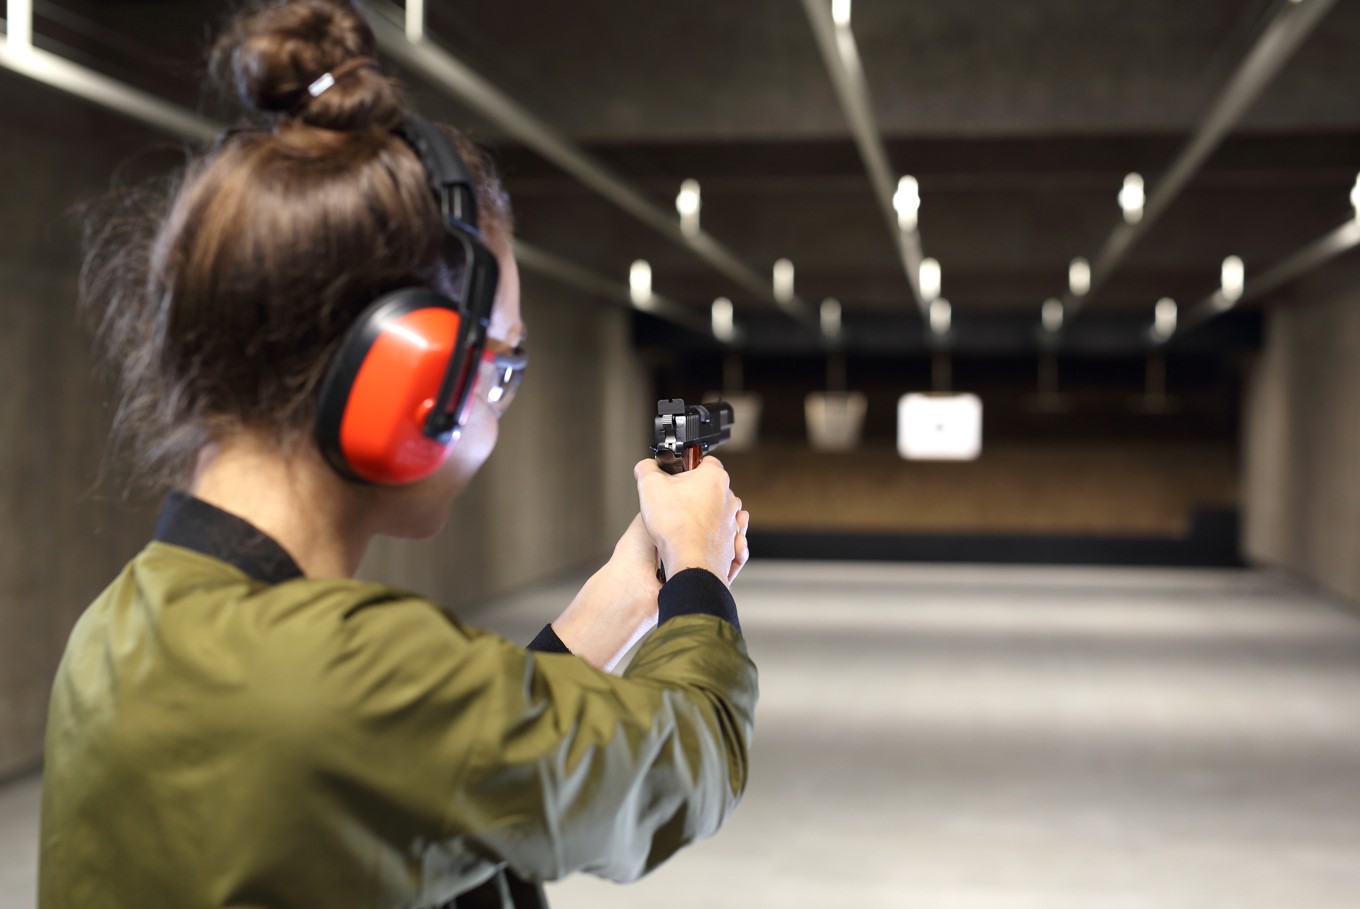 Wearing Headphones While at a Shooting Range